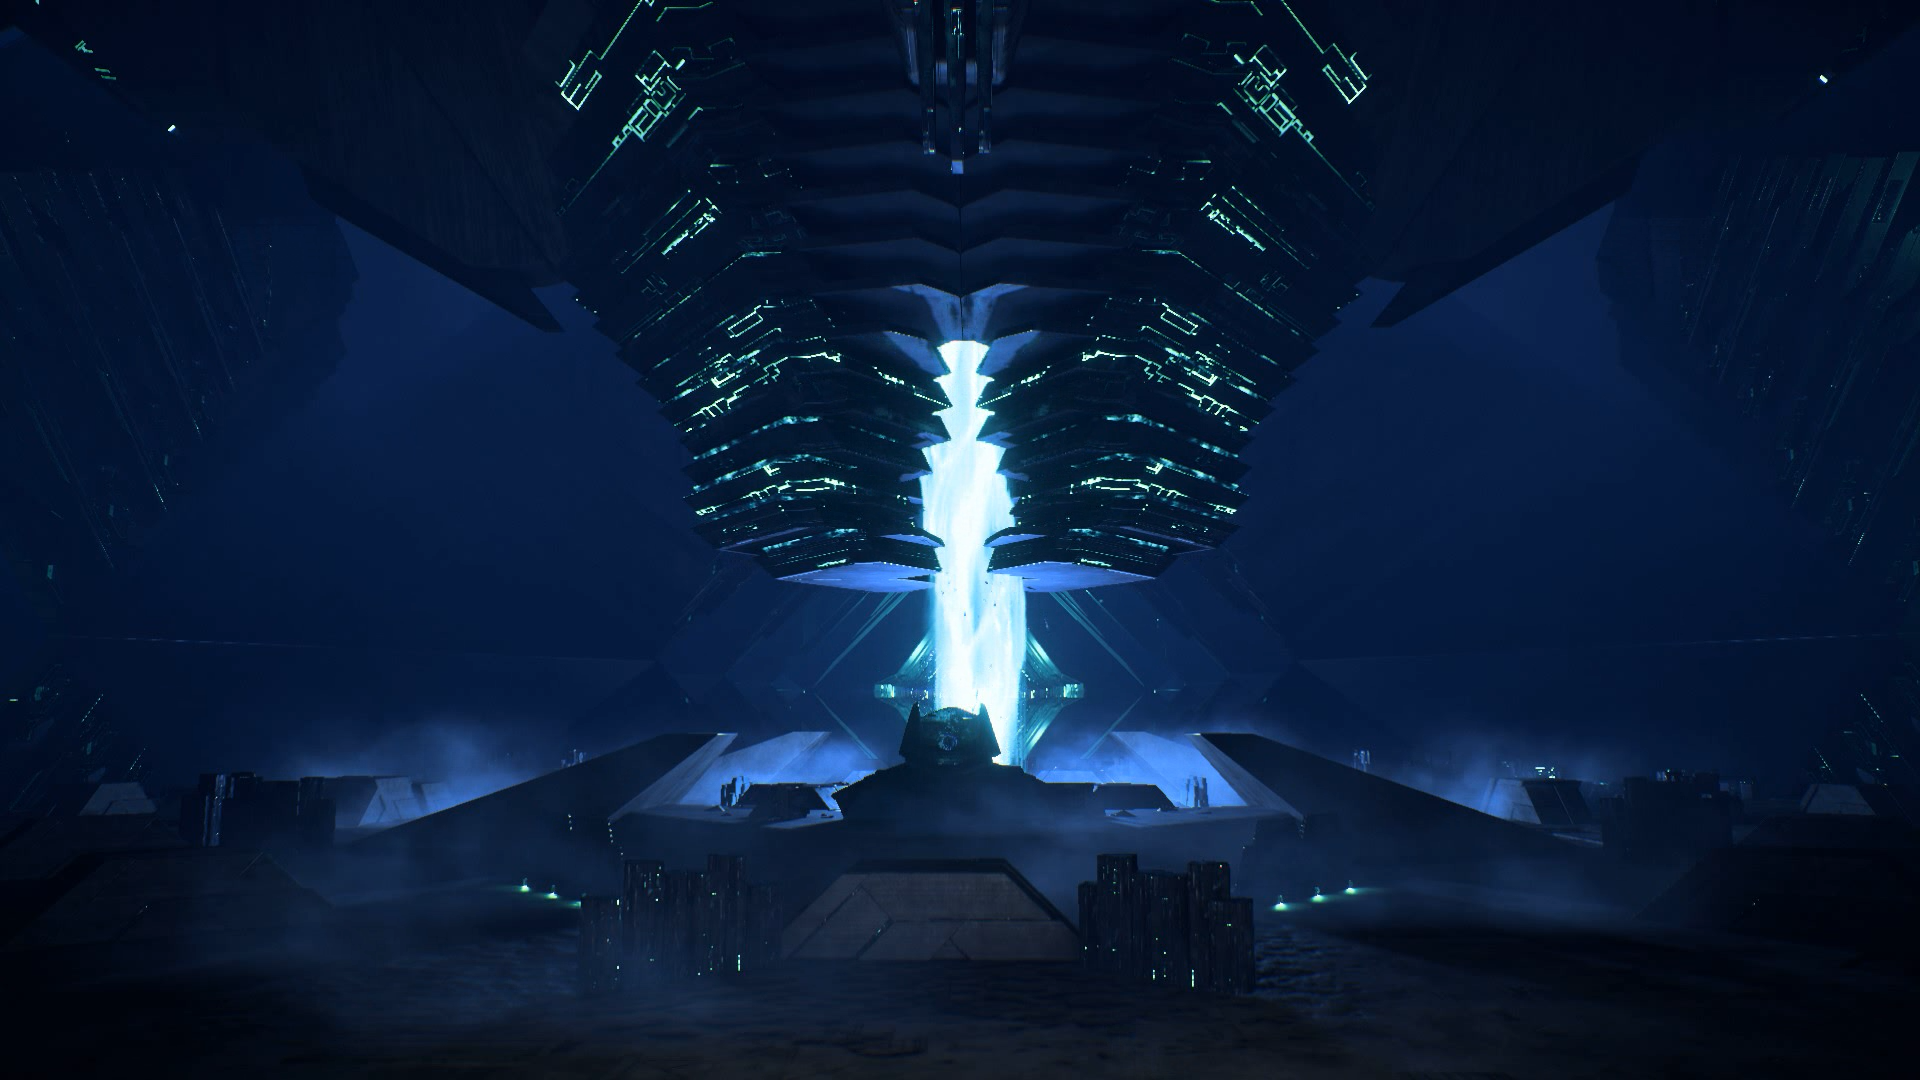 Mass Effect Andromeda Remnant Vault 06 Dreamscene By